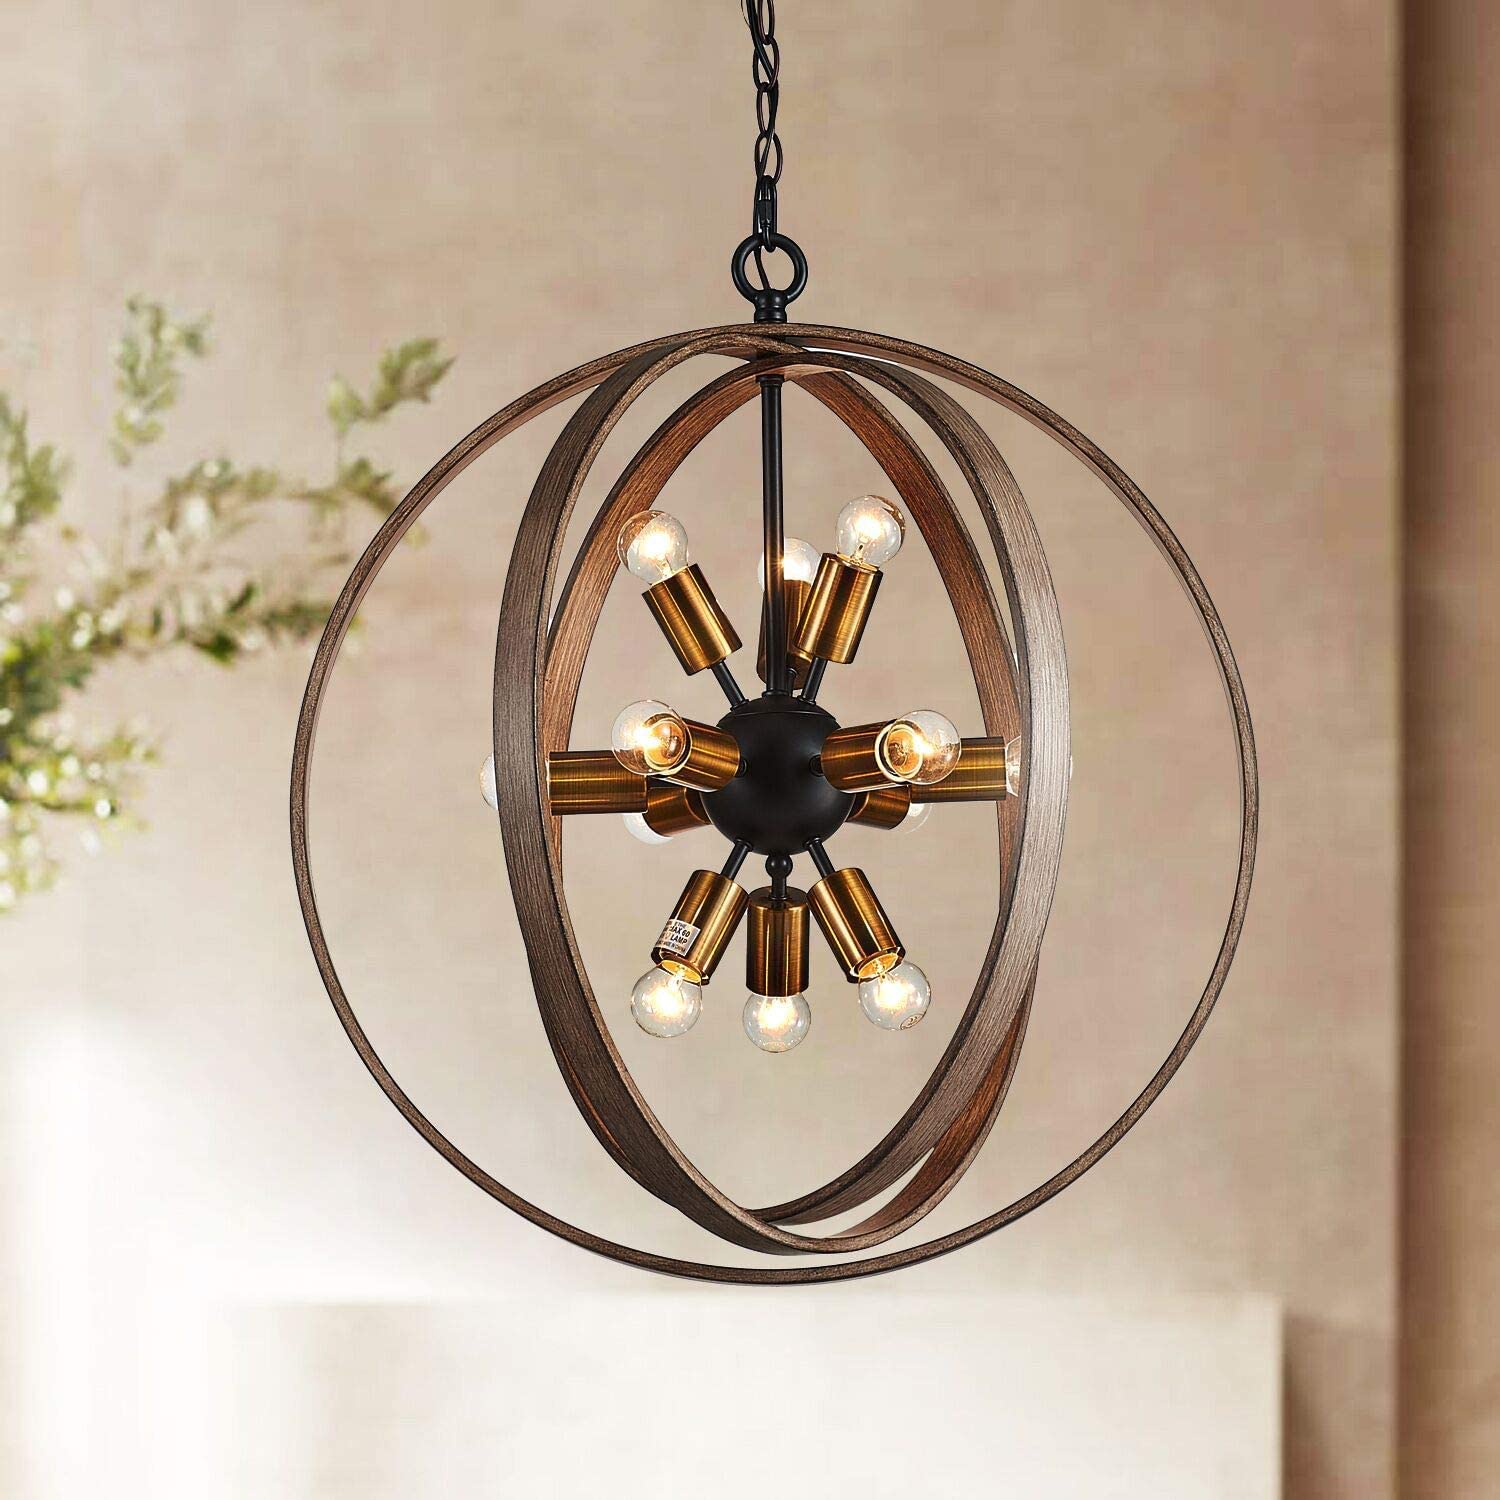 12 light globe chandelier antique farmhouse pendant lighting with oak and brass finish